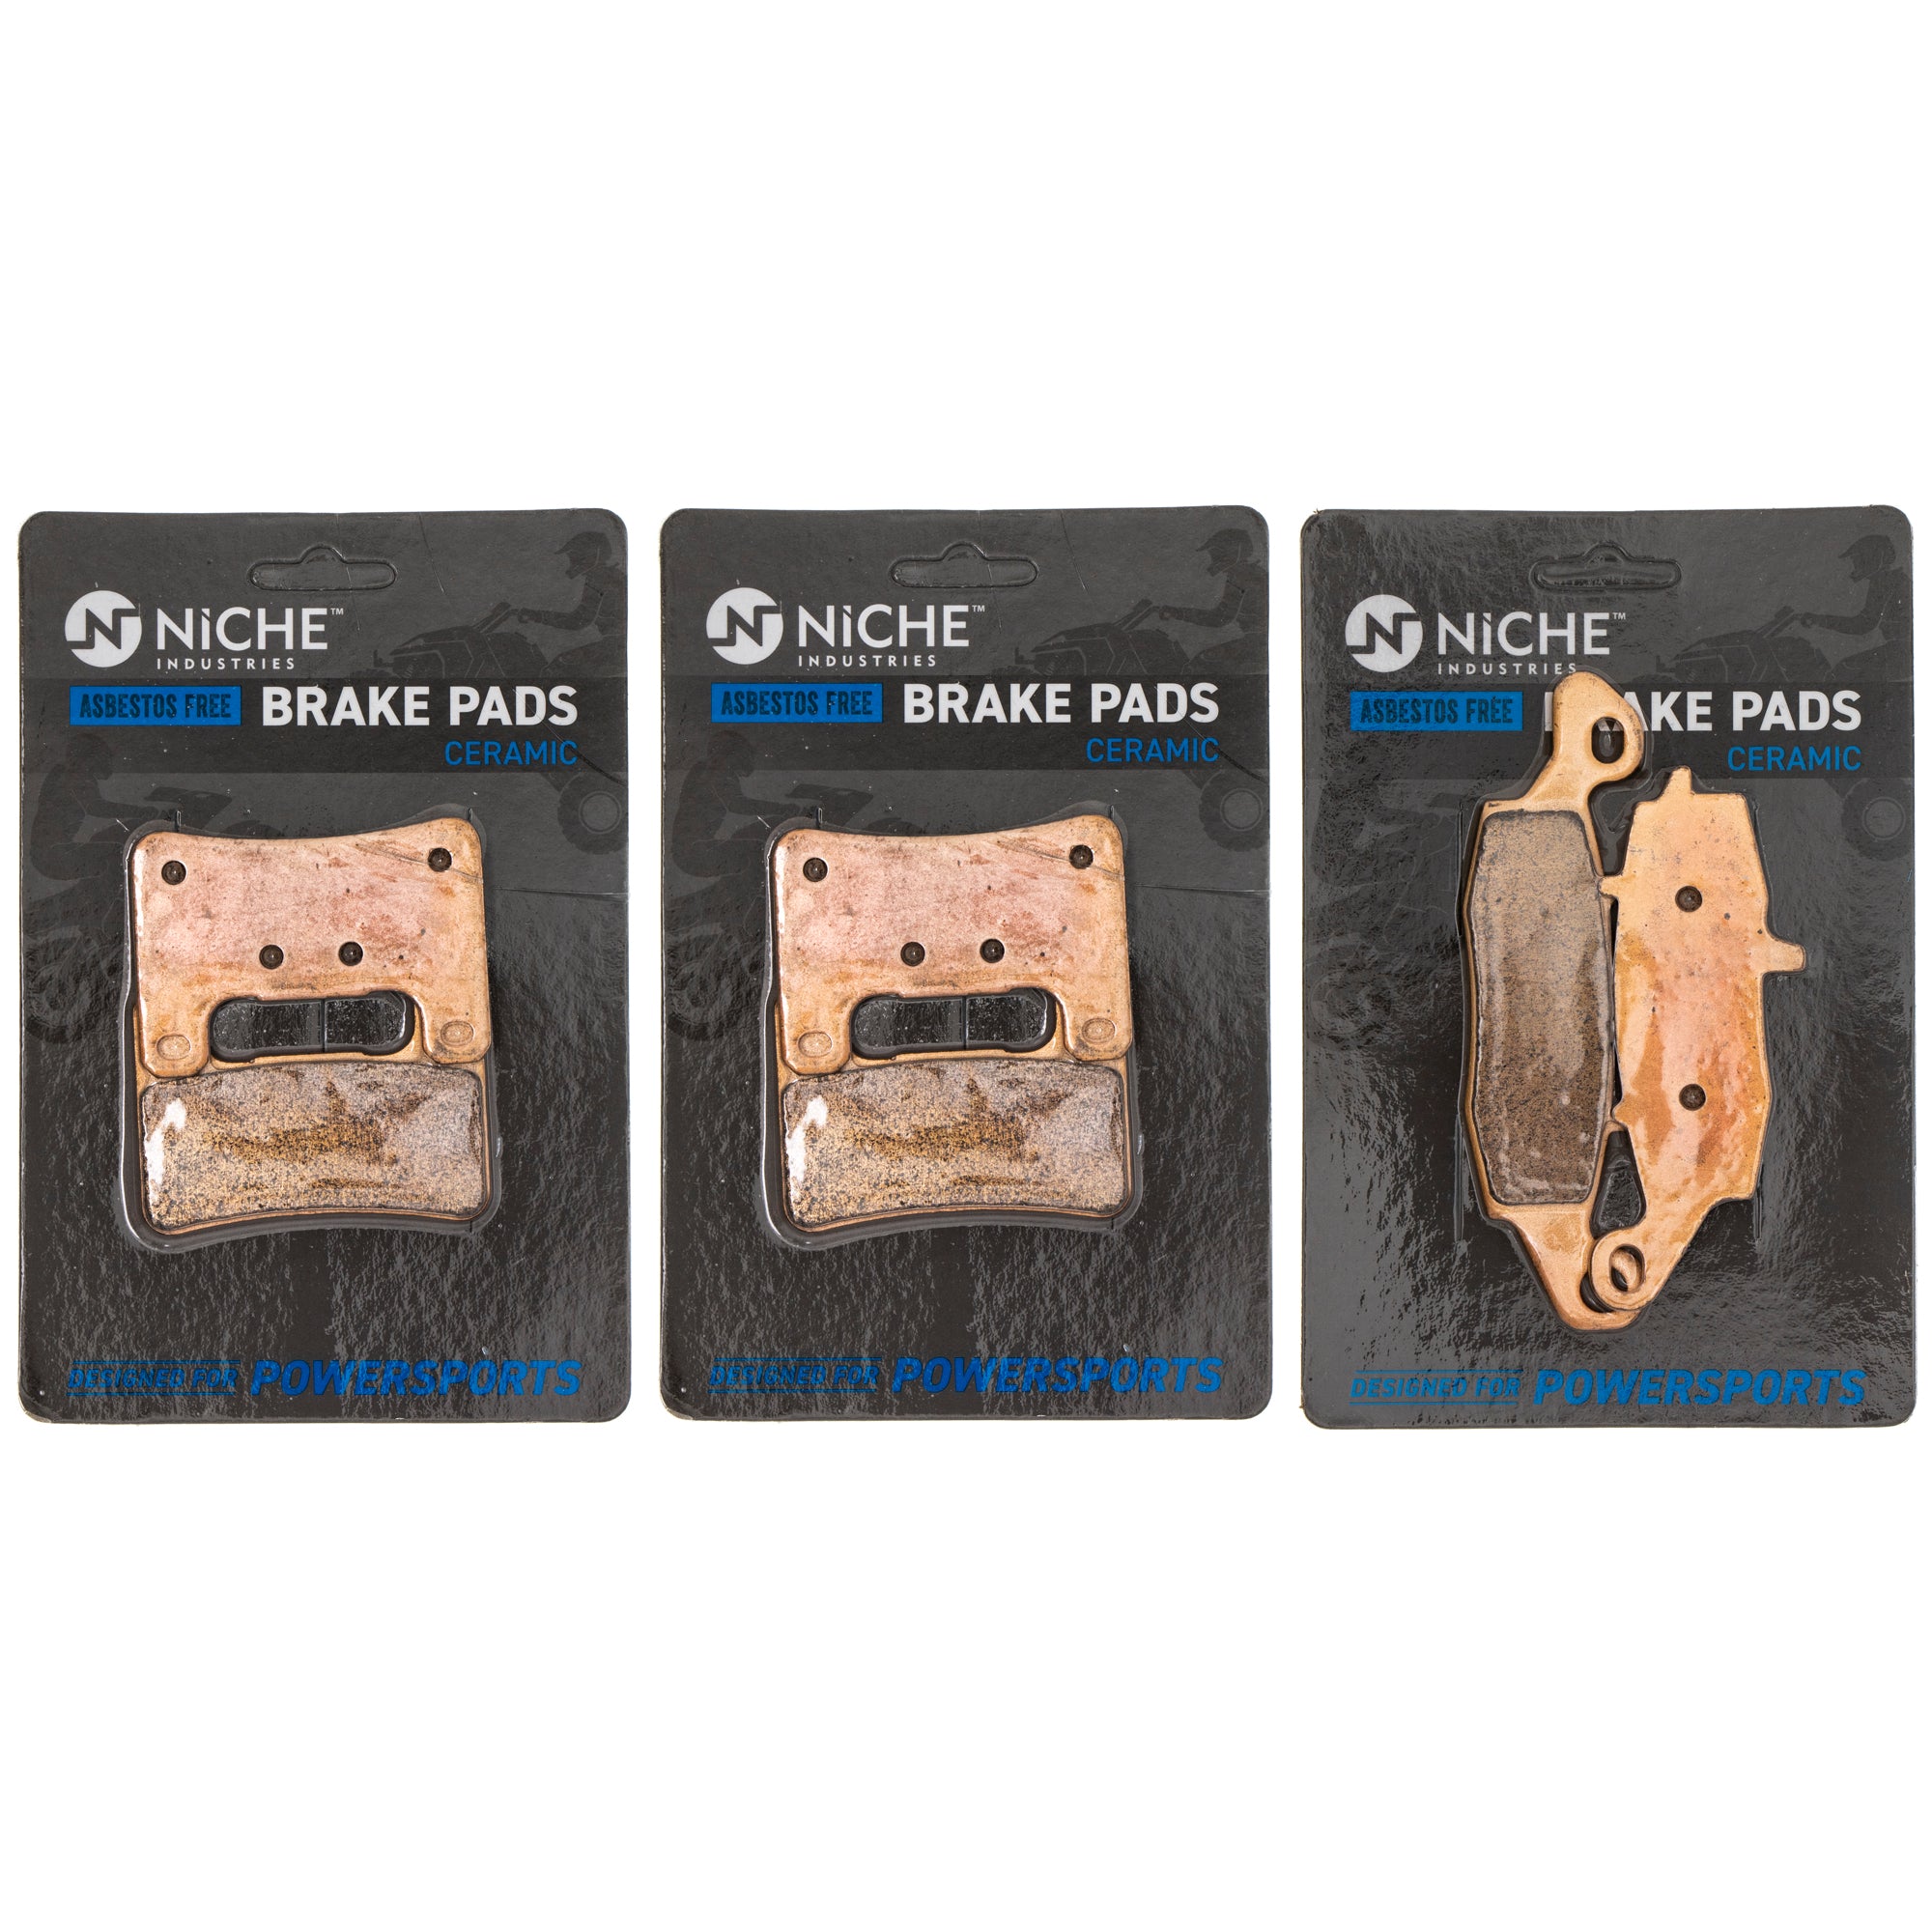 Ceramic Brake Pad Kit for Suzuki Boulevard 69100-01870 59100-29850 NICHE MK1002571